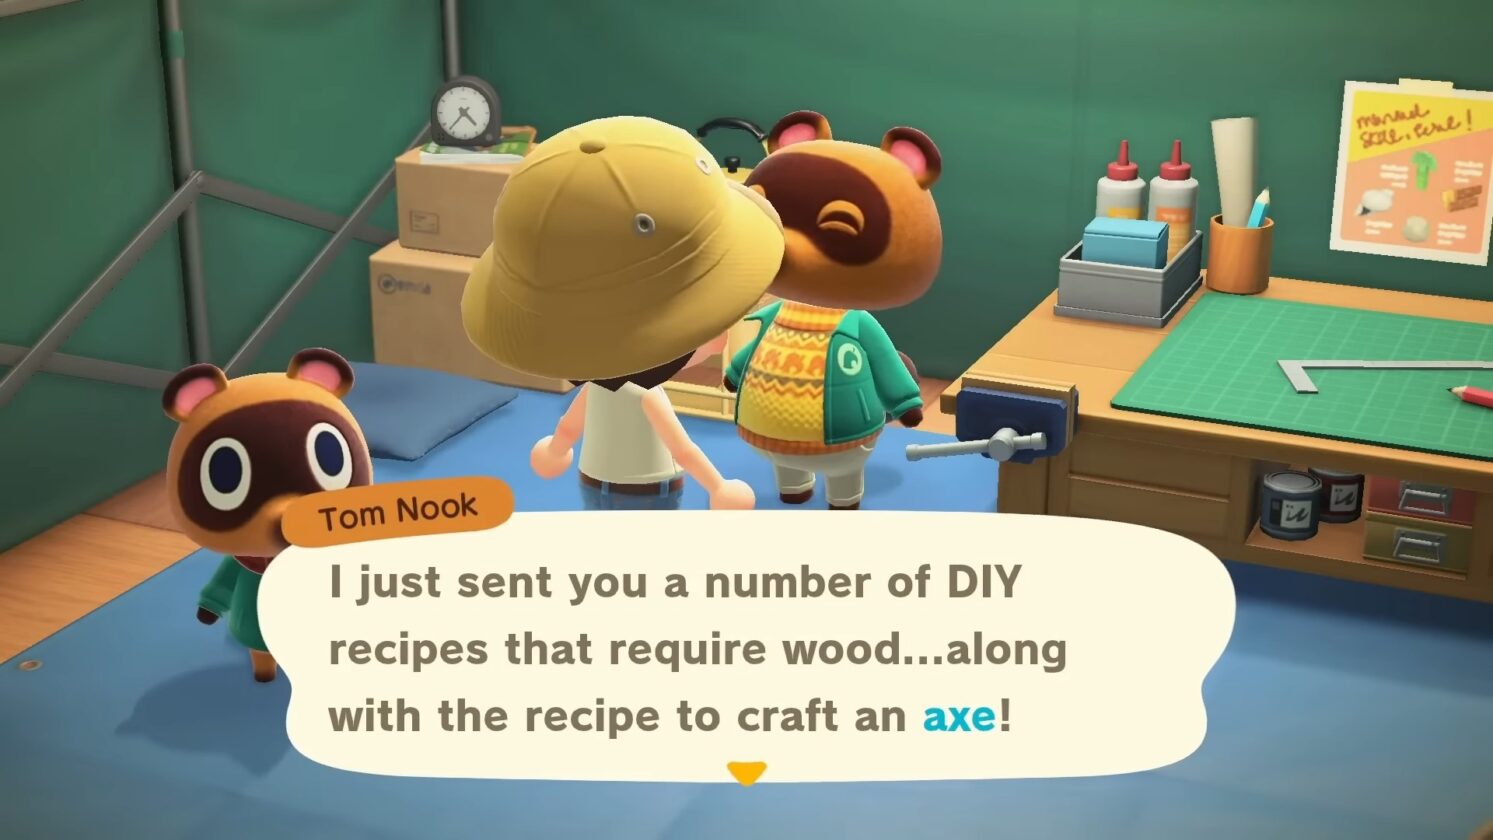 Ricetta per l'ascia in Animal Crossing New Horizons